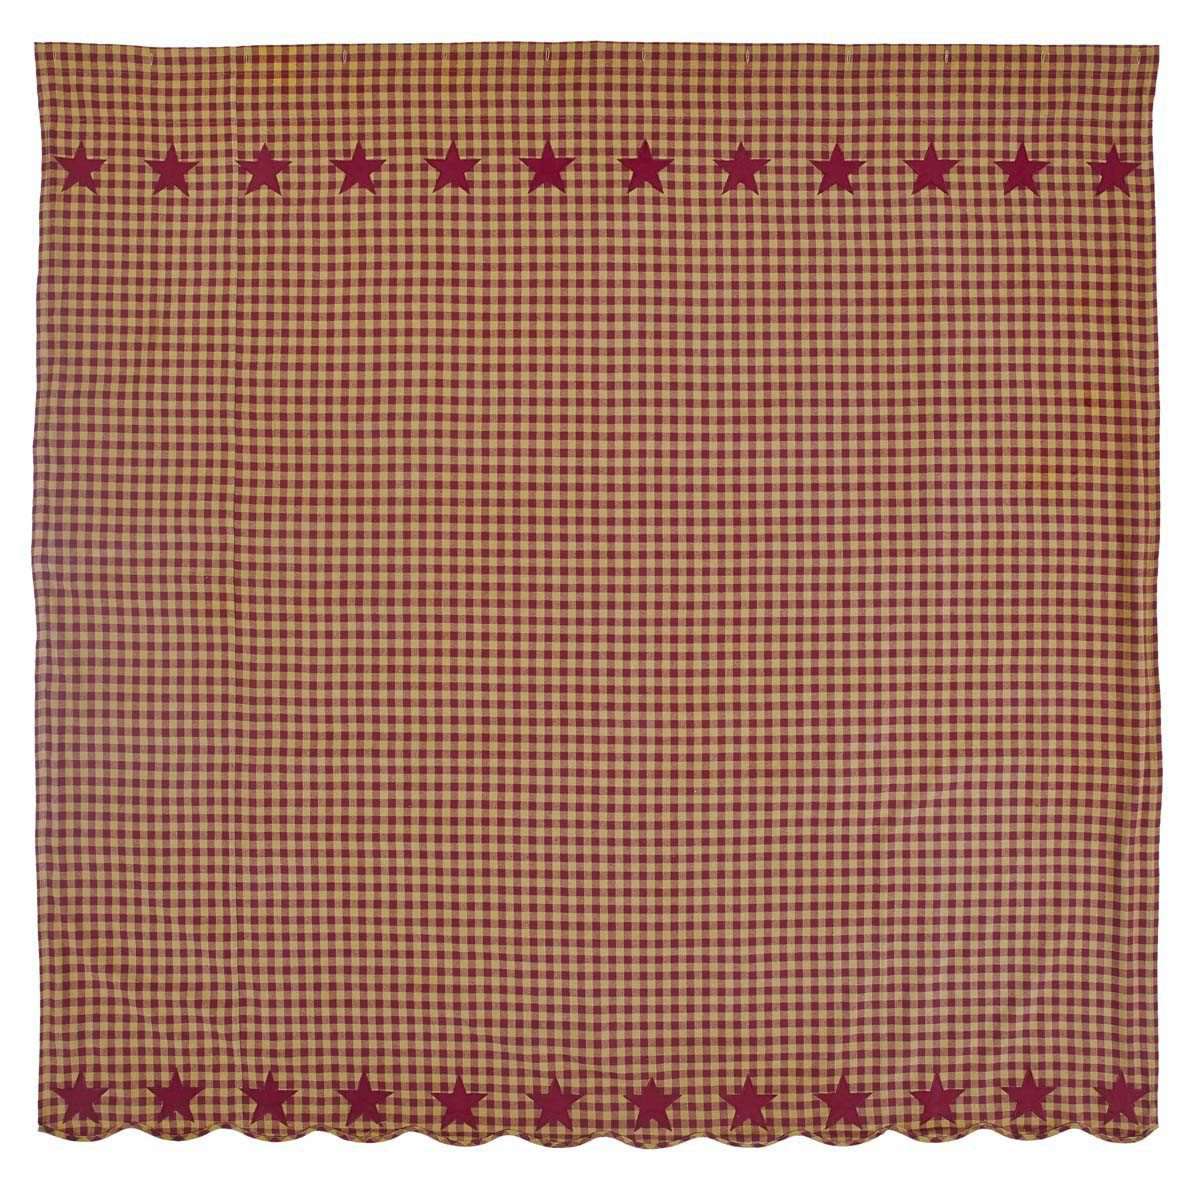 Burgundy Star Scalloped Shower Curtain 72"x72" curtain VHC Brands 